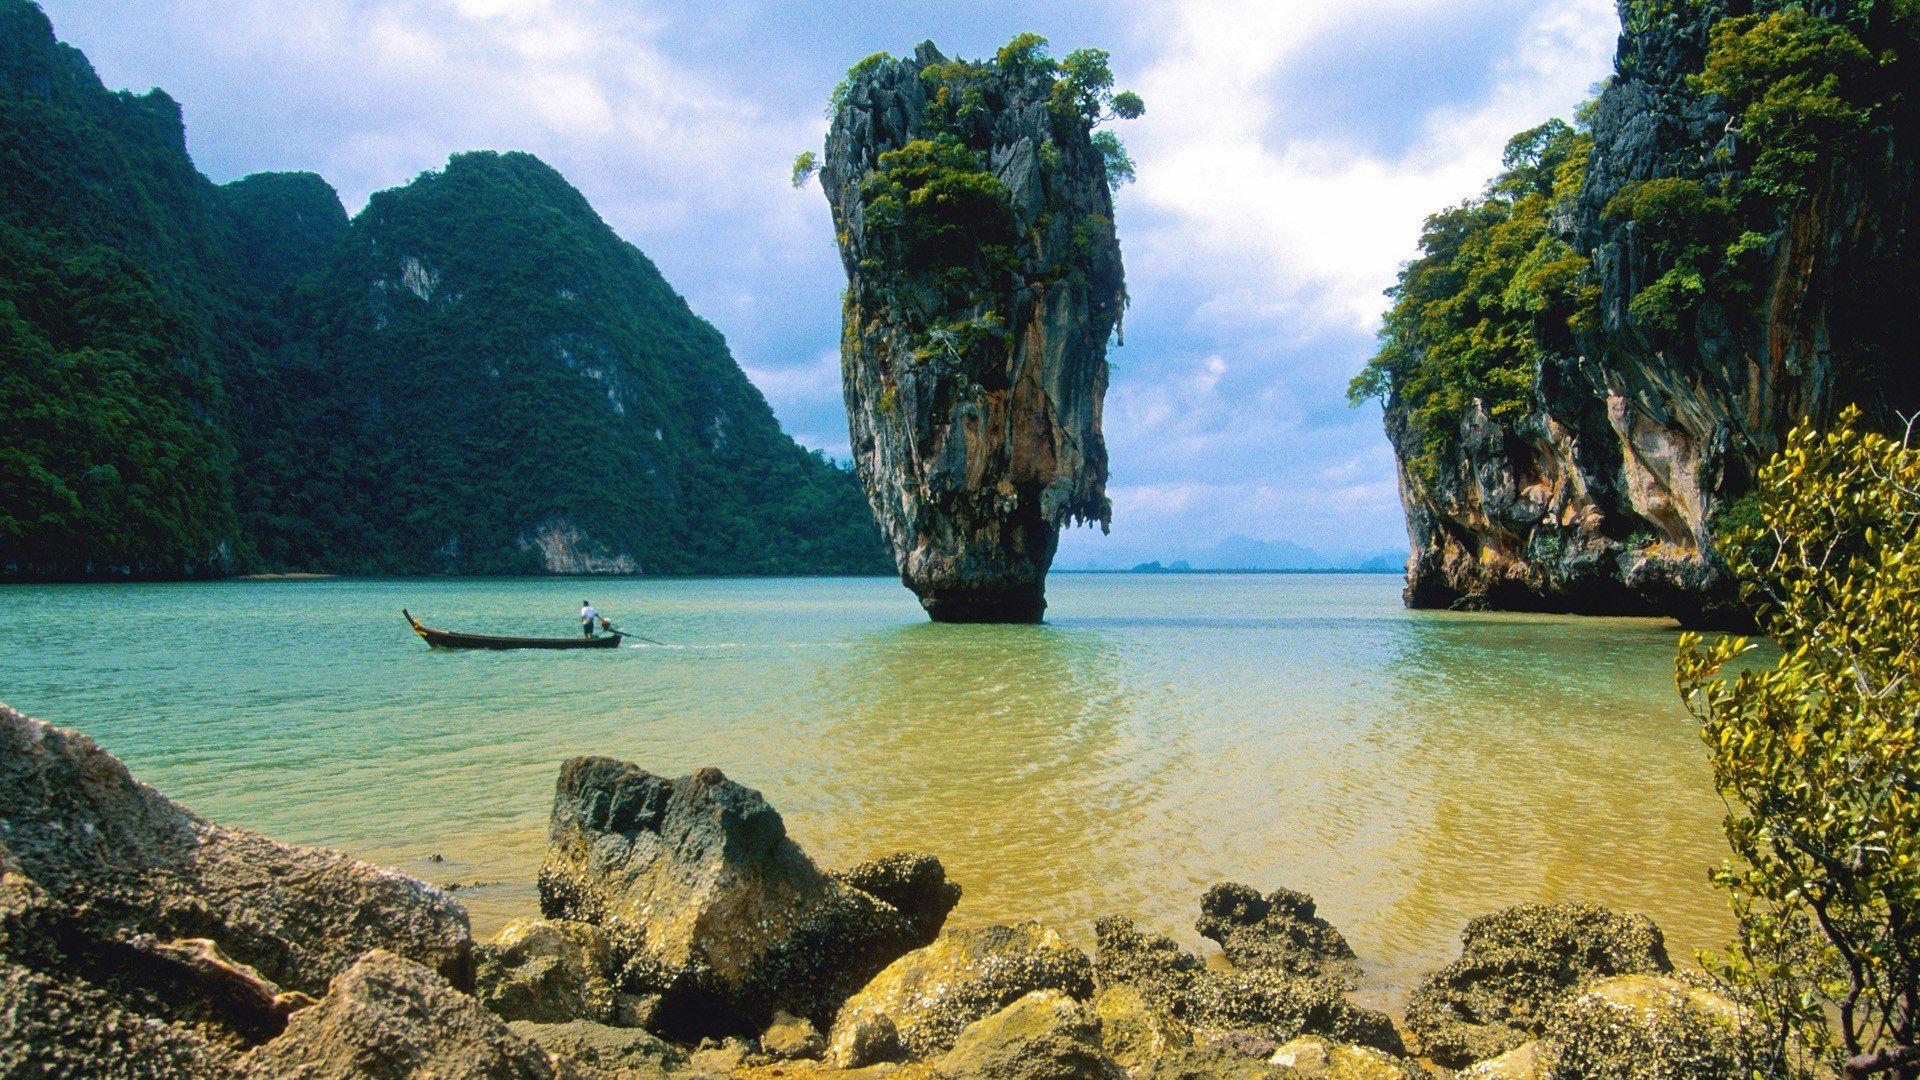 Landscapes nature James Bond islands Thailand majestic National Park